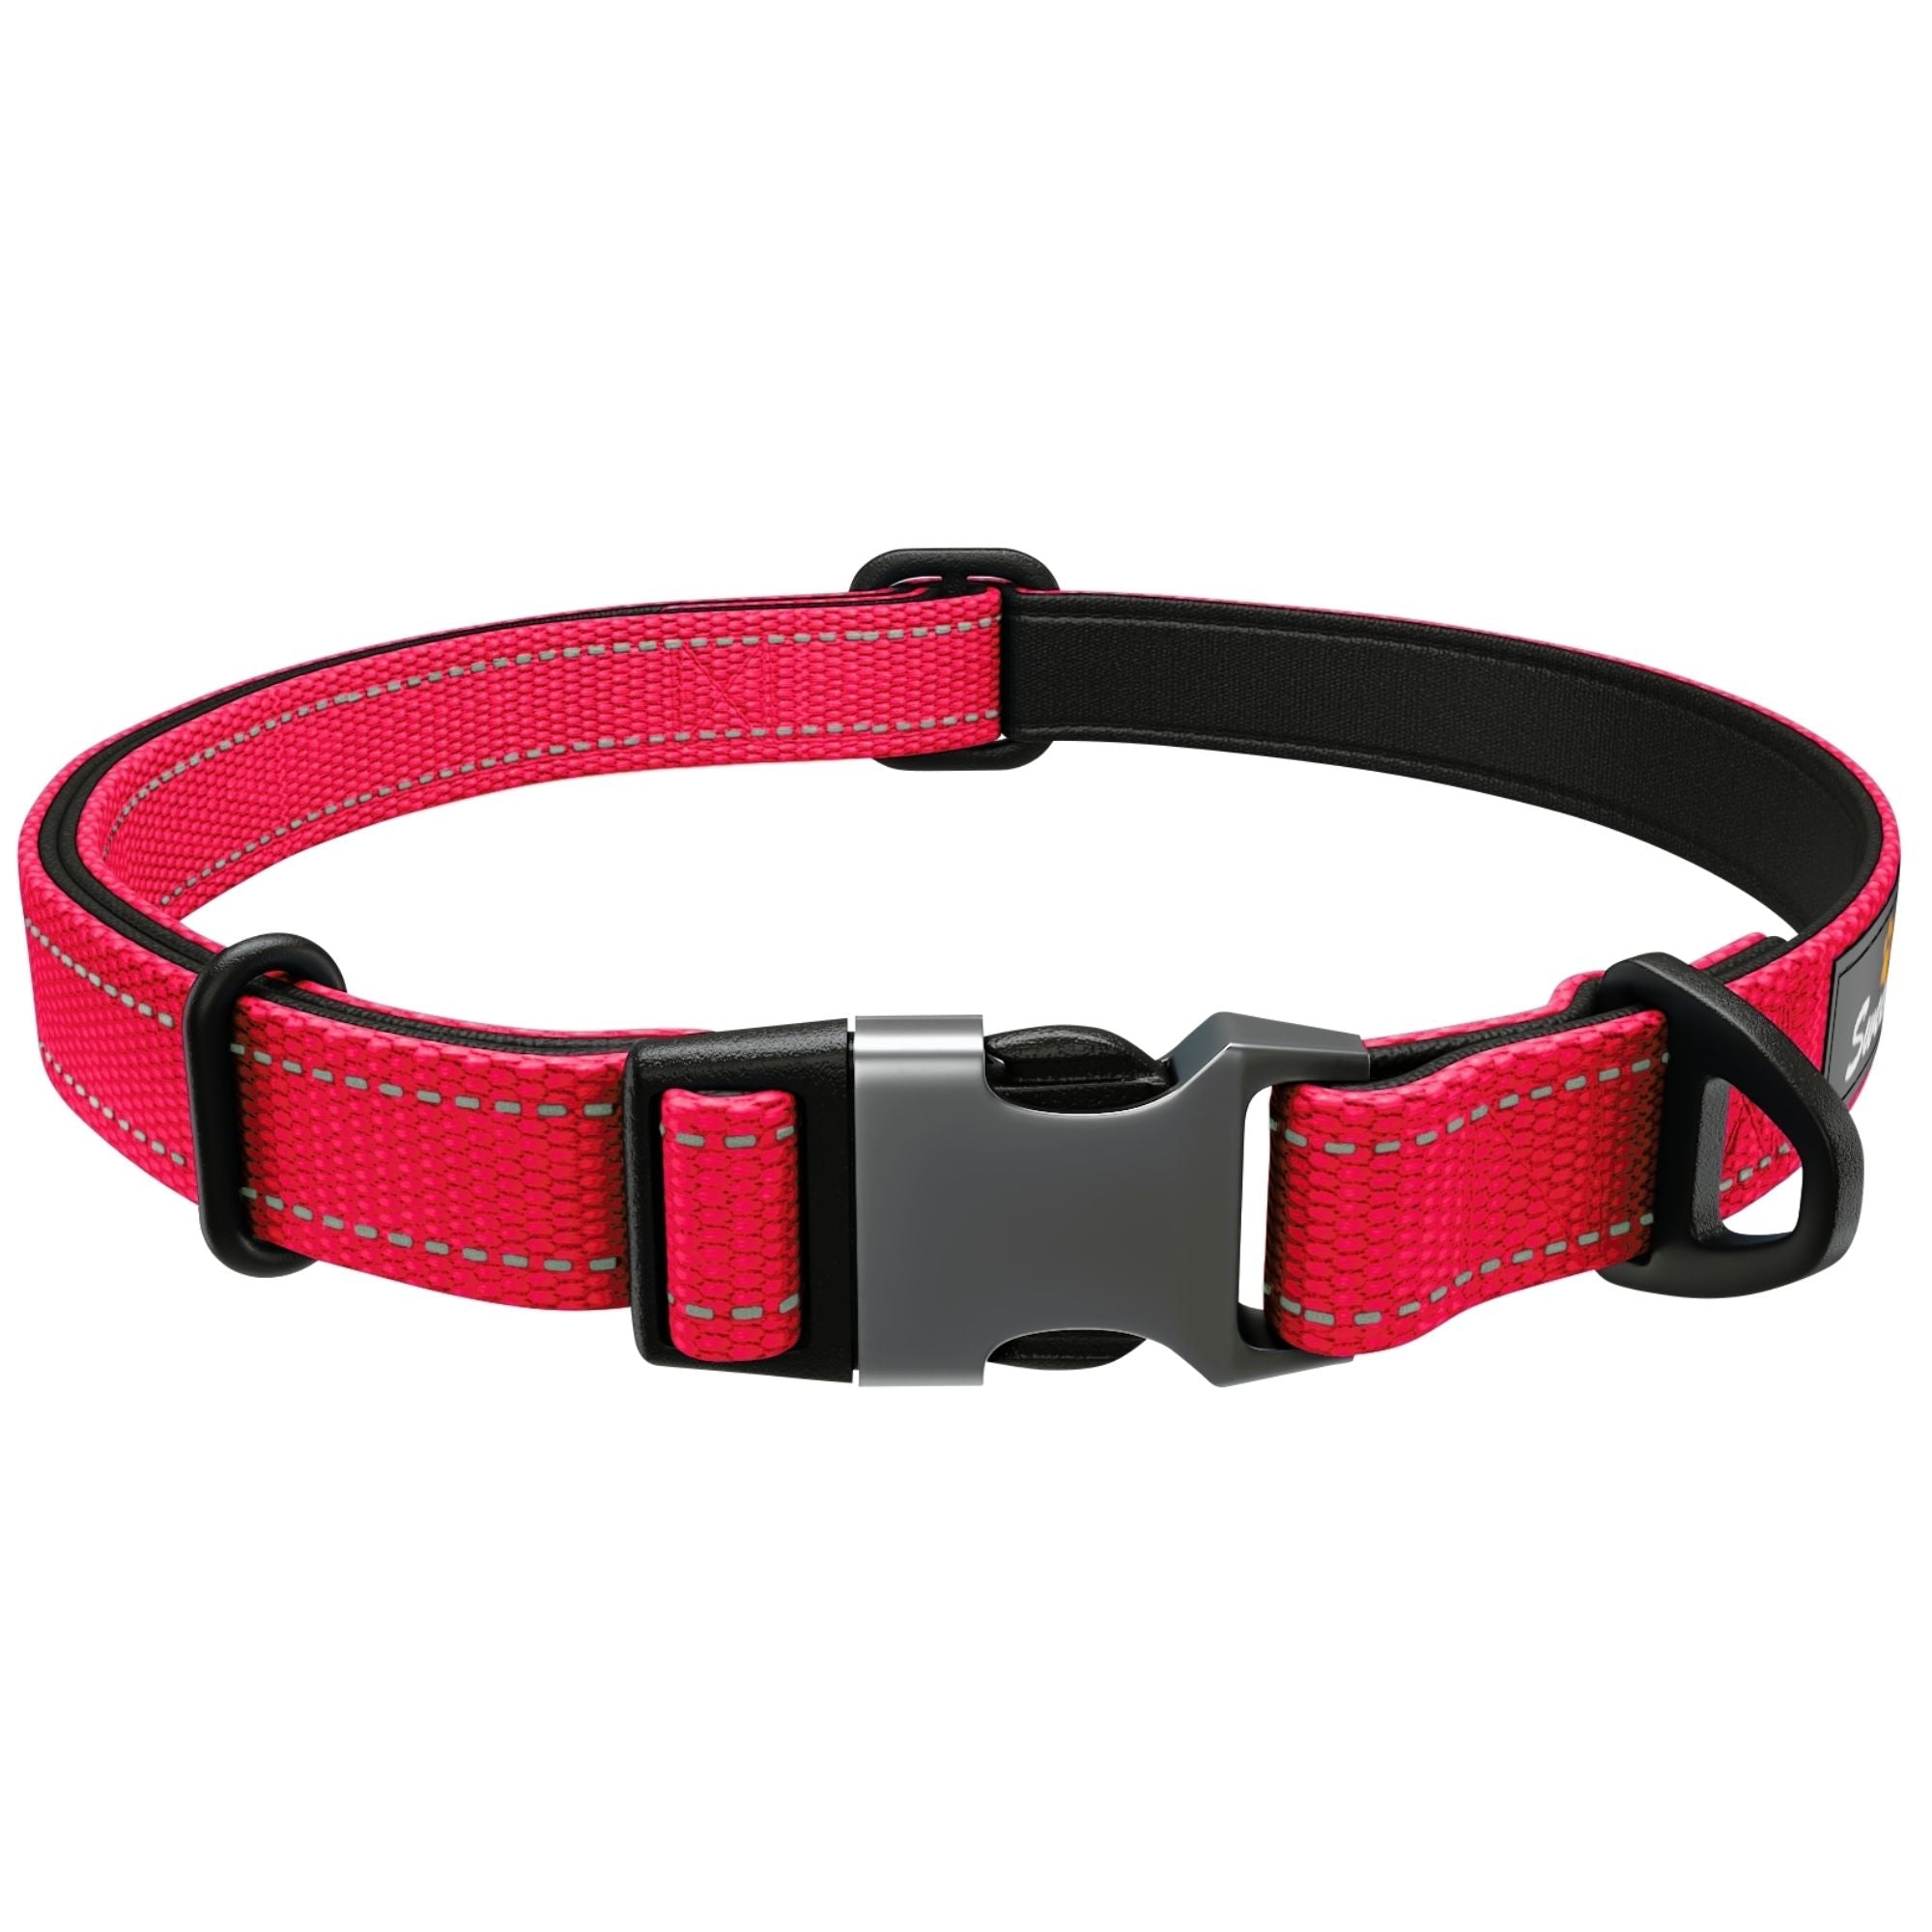 Neoprene Padded Dog Collar - Red - Sweetie